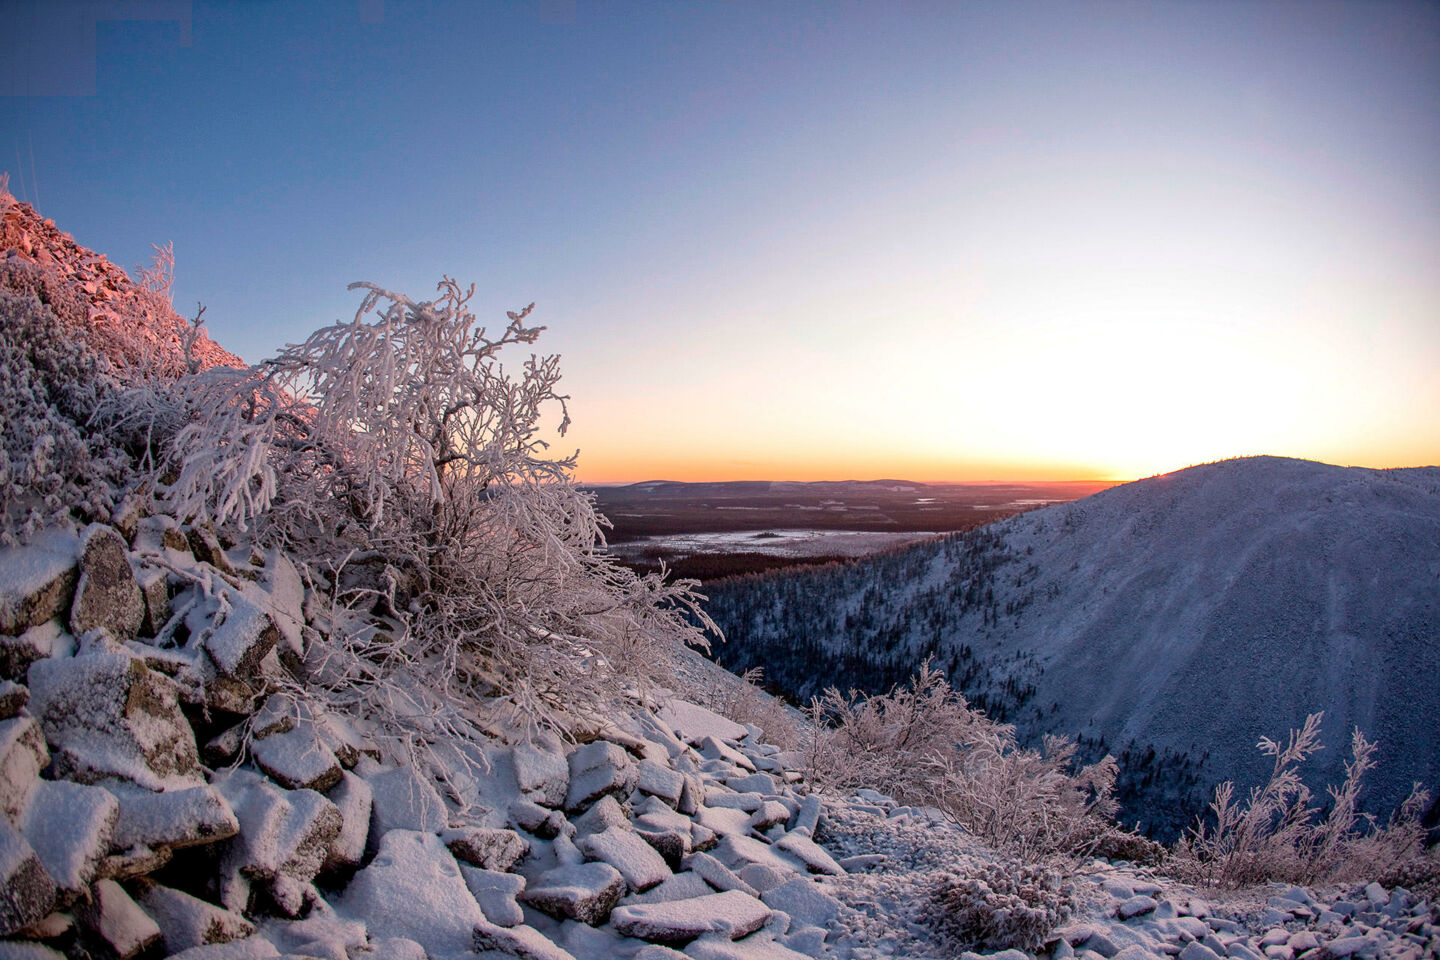 The winter sun over Pelkosenniemi, a filming location in Finnish Lapland